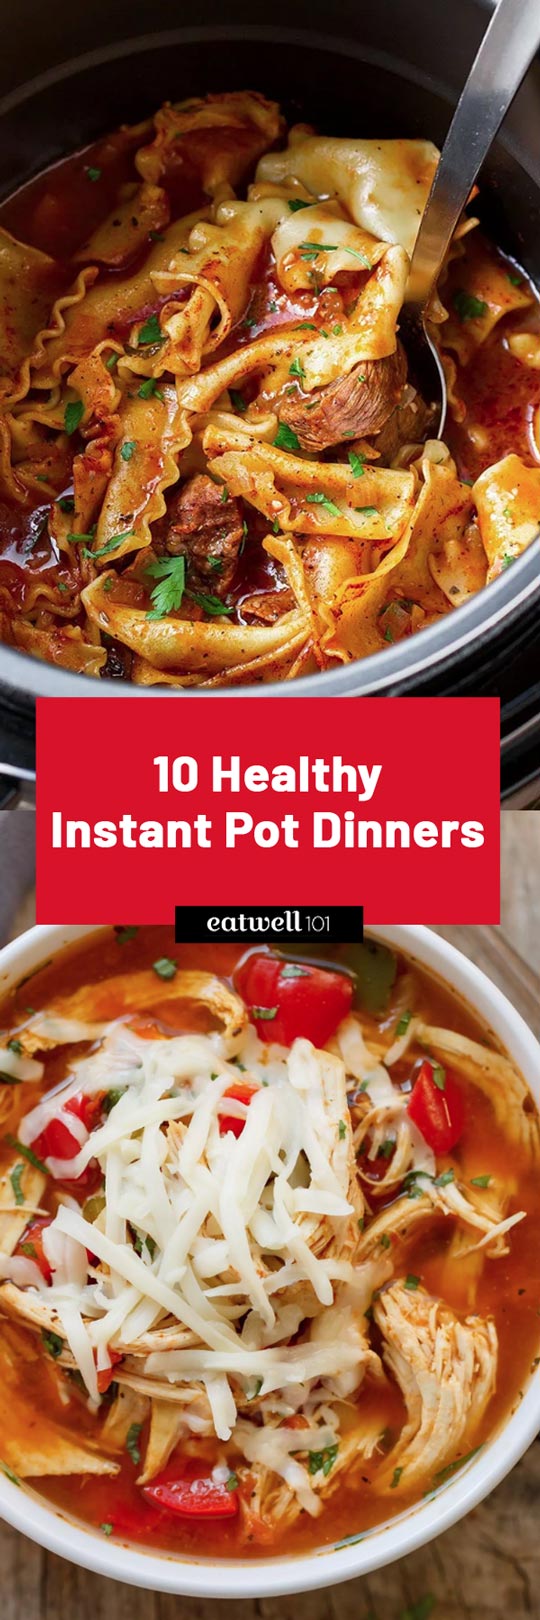 Instant Pot Recipes 10 Healthy Instant Pot Dinner Recipes for the 